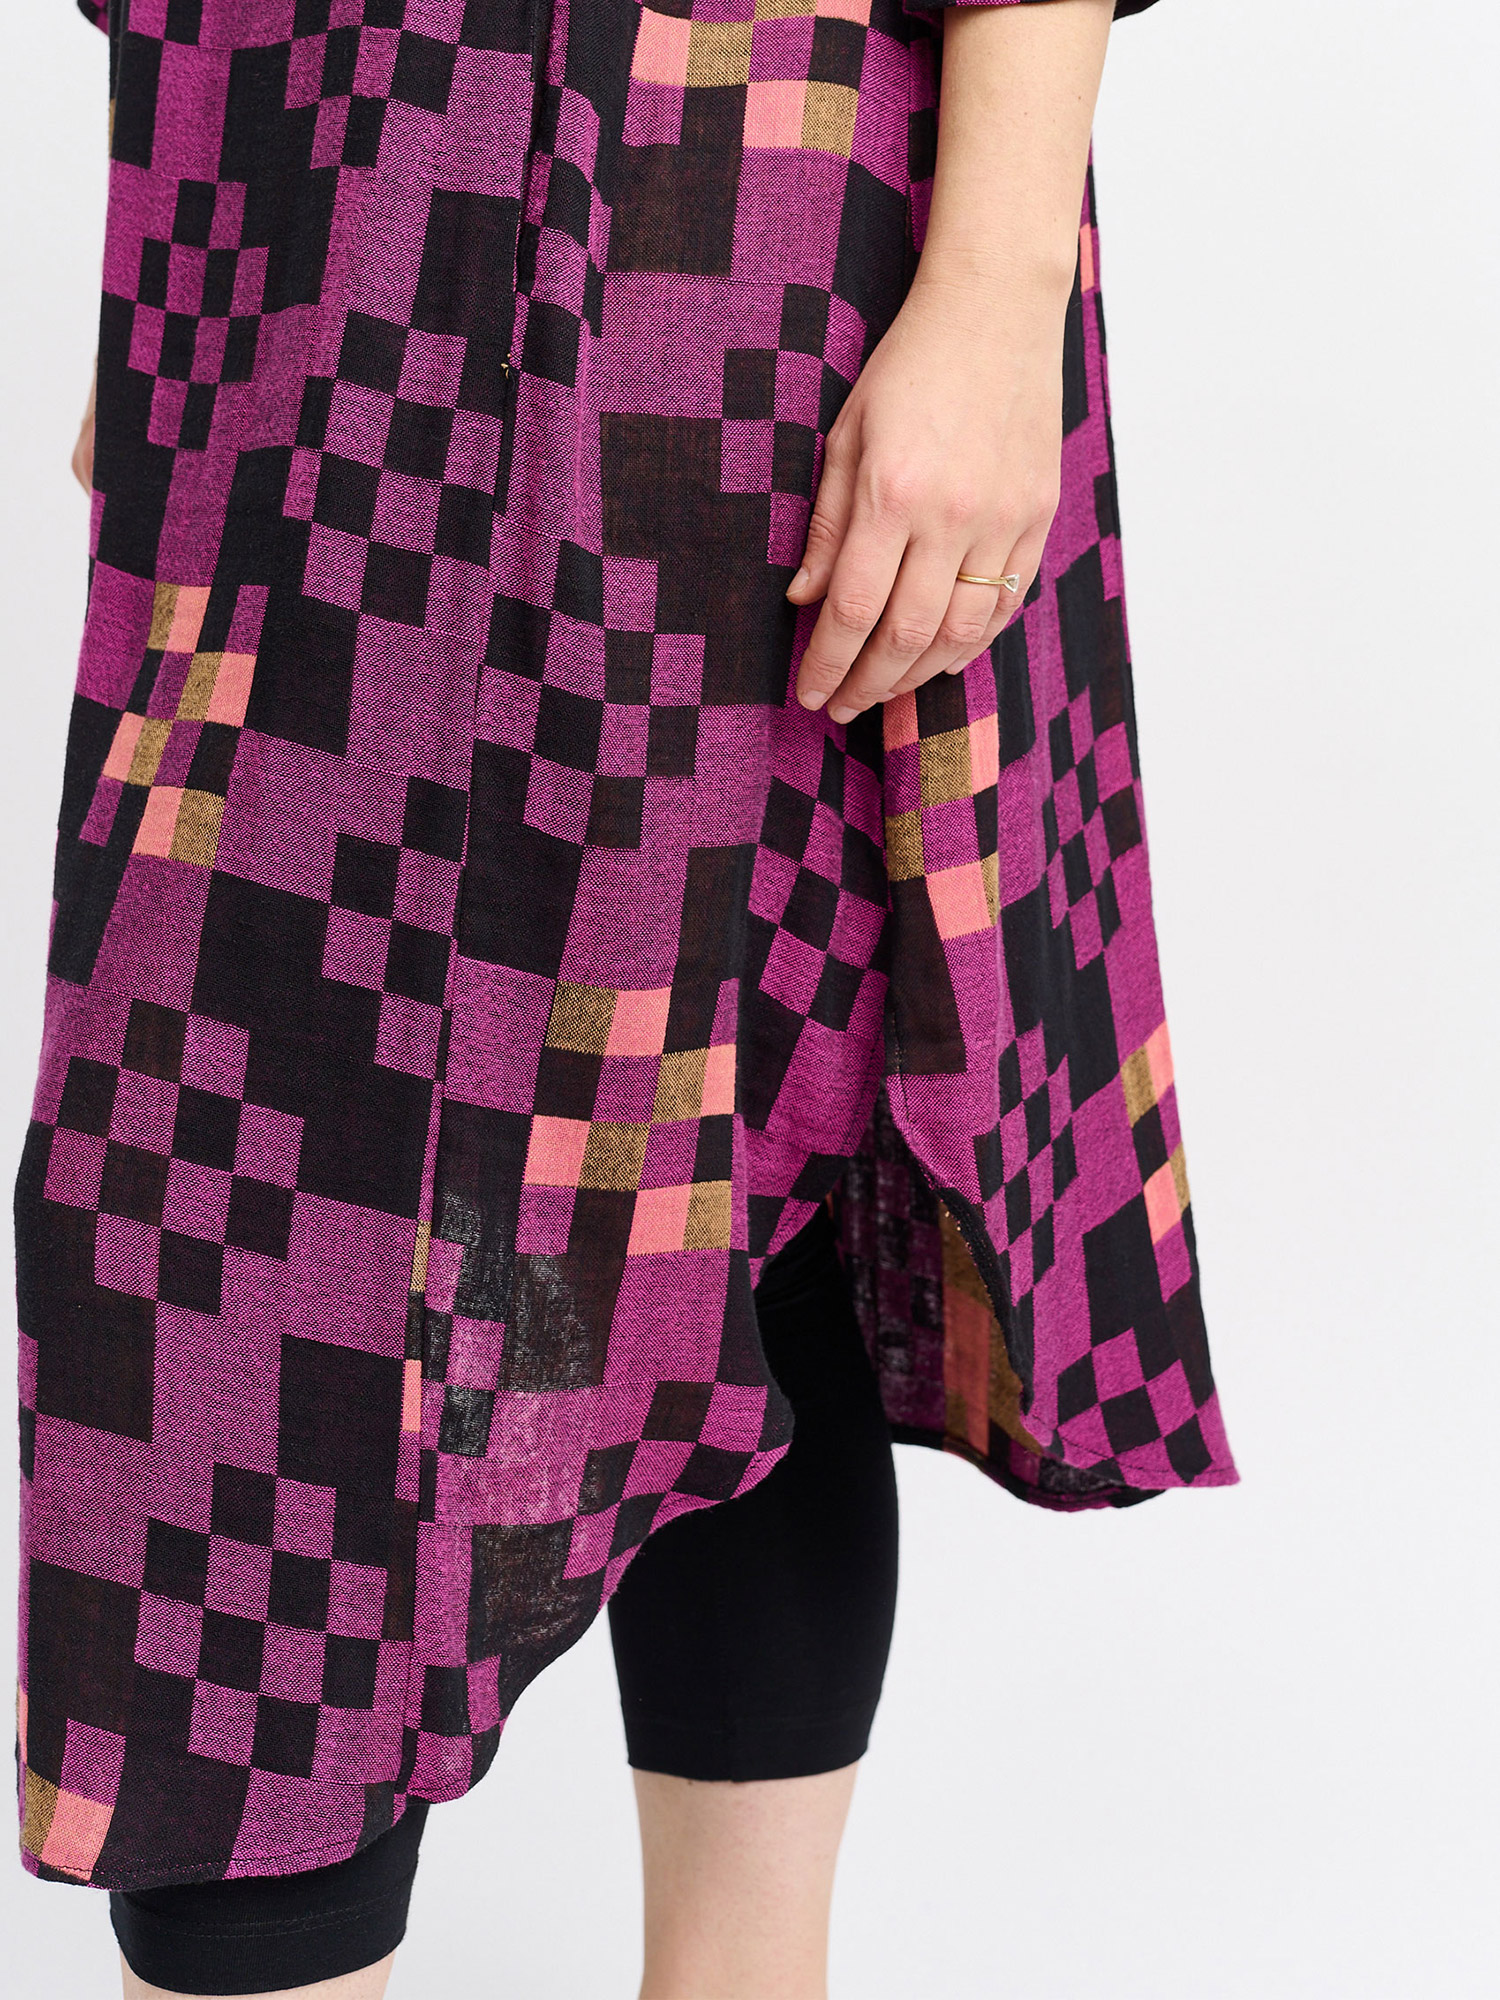 SAMMY - Lilla kjole med rutete mønster fra Pont Neuf